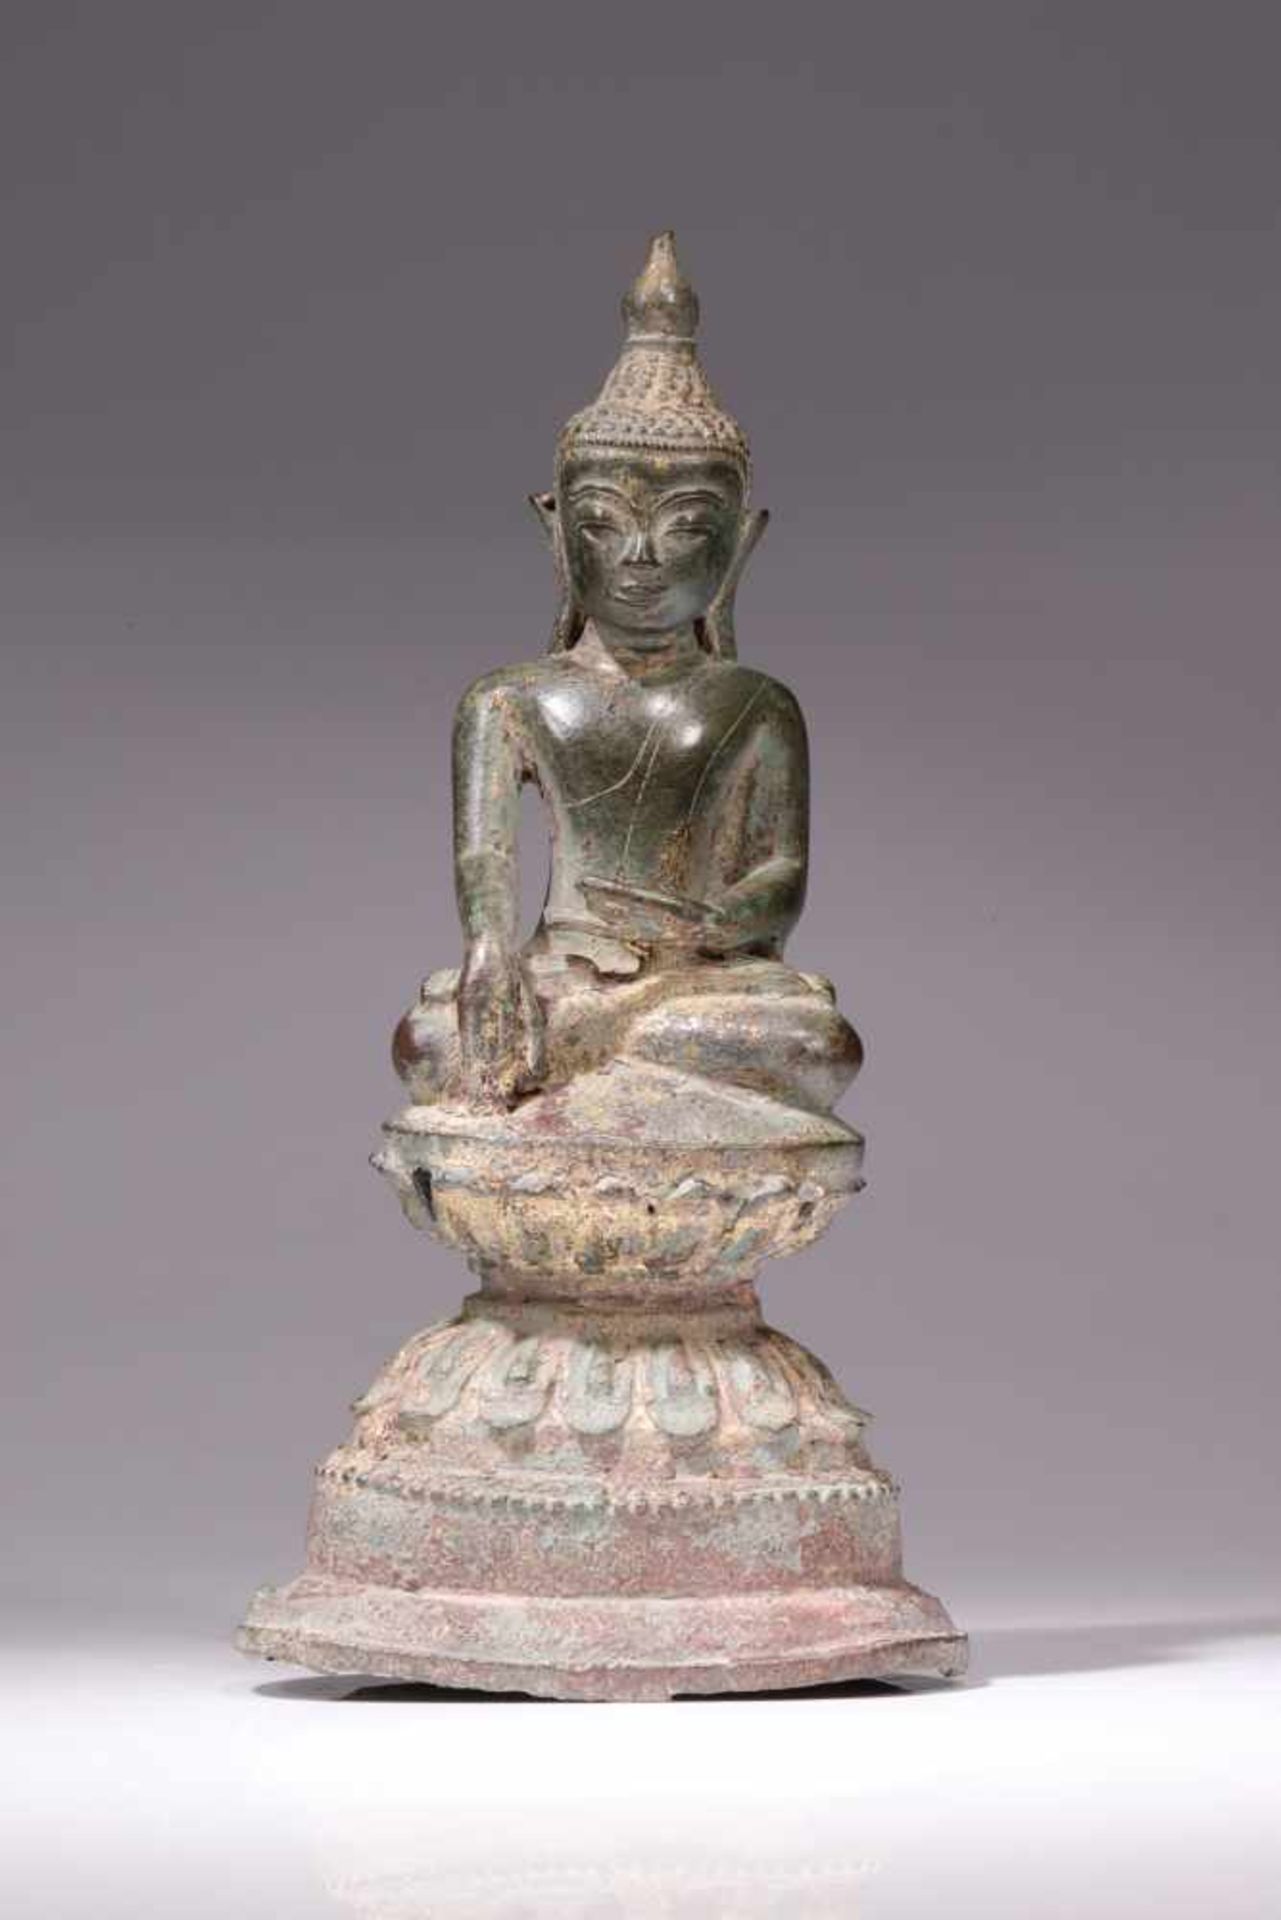 BUDDHAgreenish bronze with traces of gold,Birma, 17th century,Size: 21 cm Buddha Shakyamuni, in '